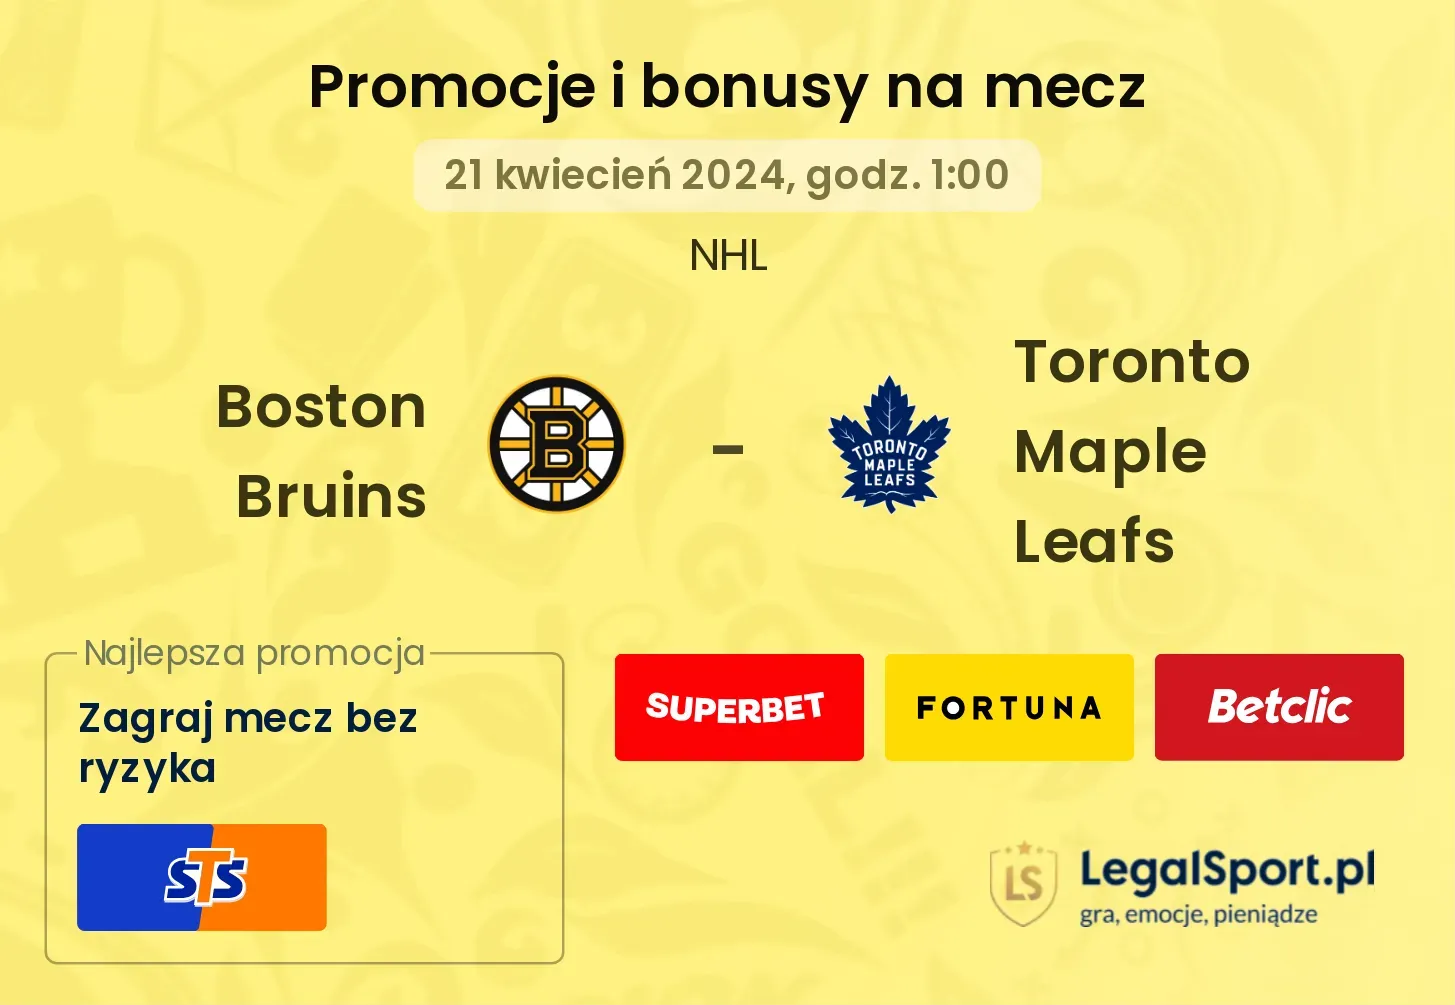 Boston Bruins - Toronto Maple Leafs promocje bonusy na mecz